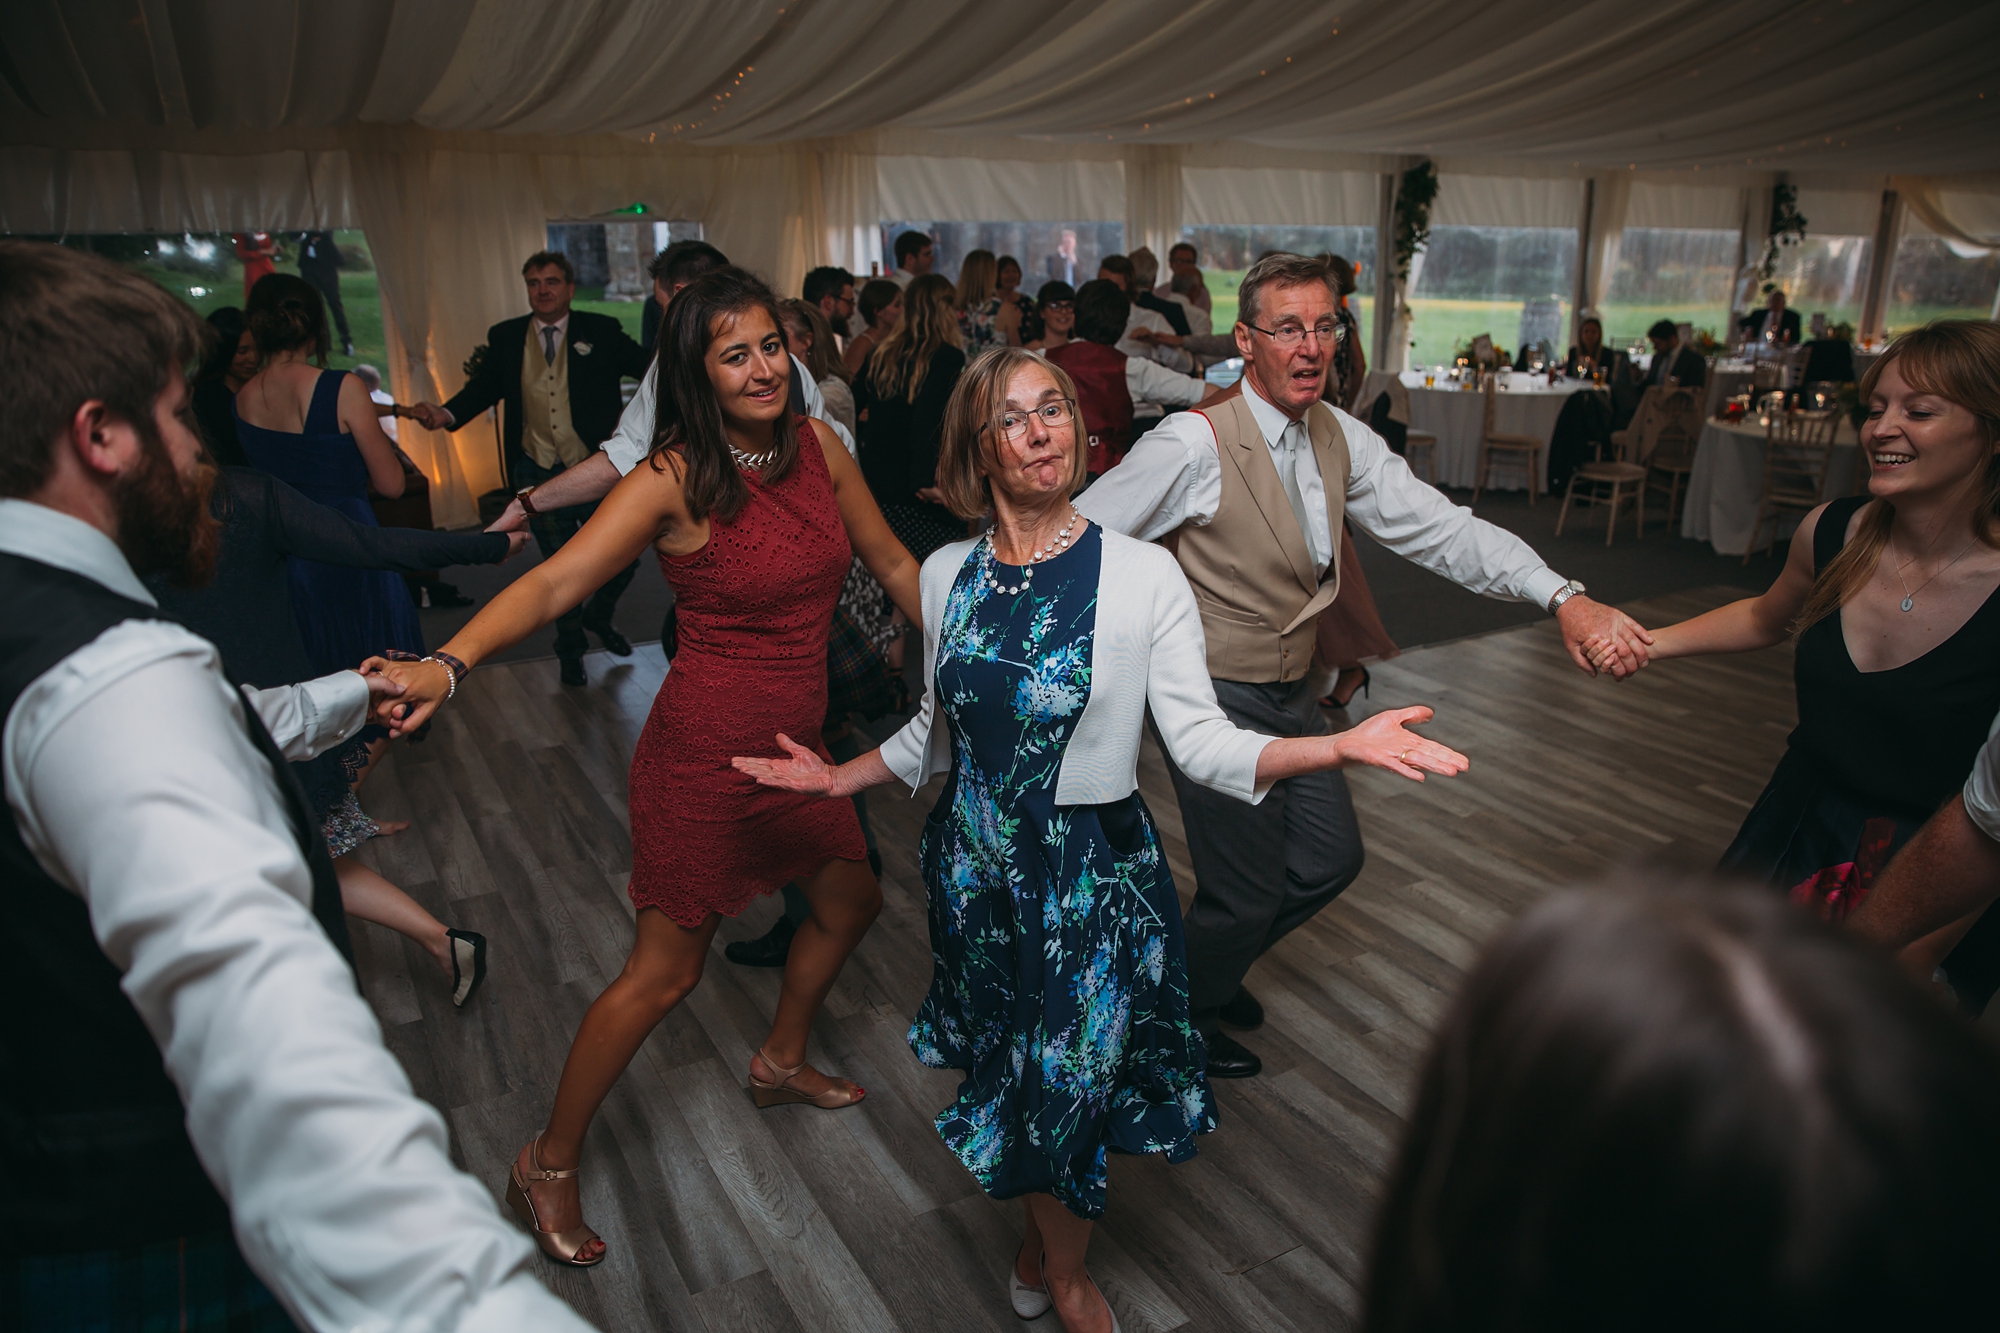 Crazy dancing at Dunglass Estate wedding reception, our best wedding photographs